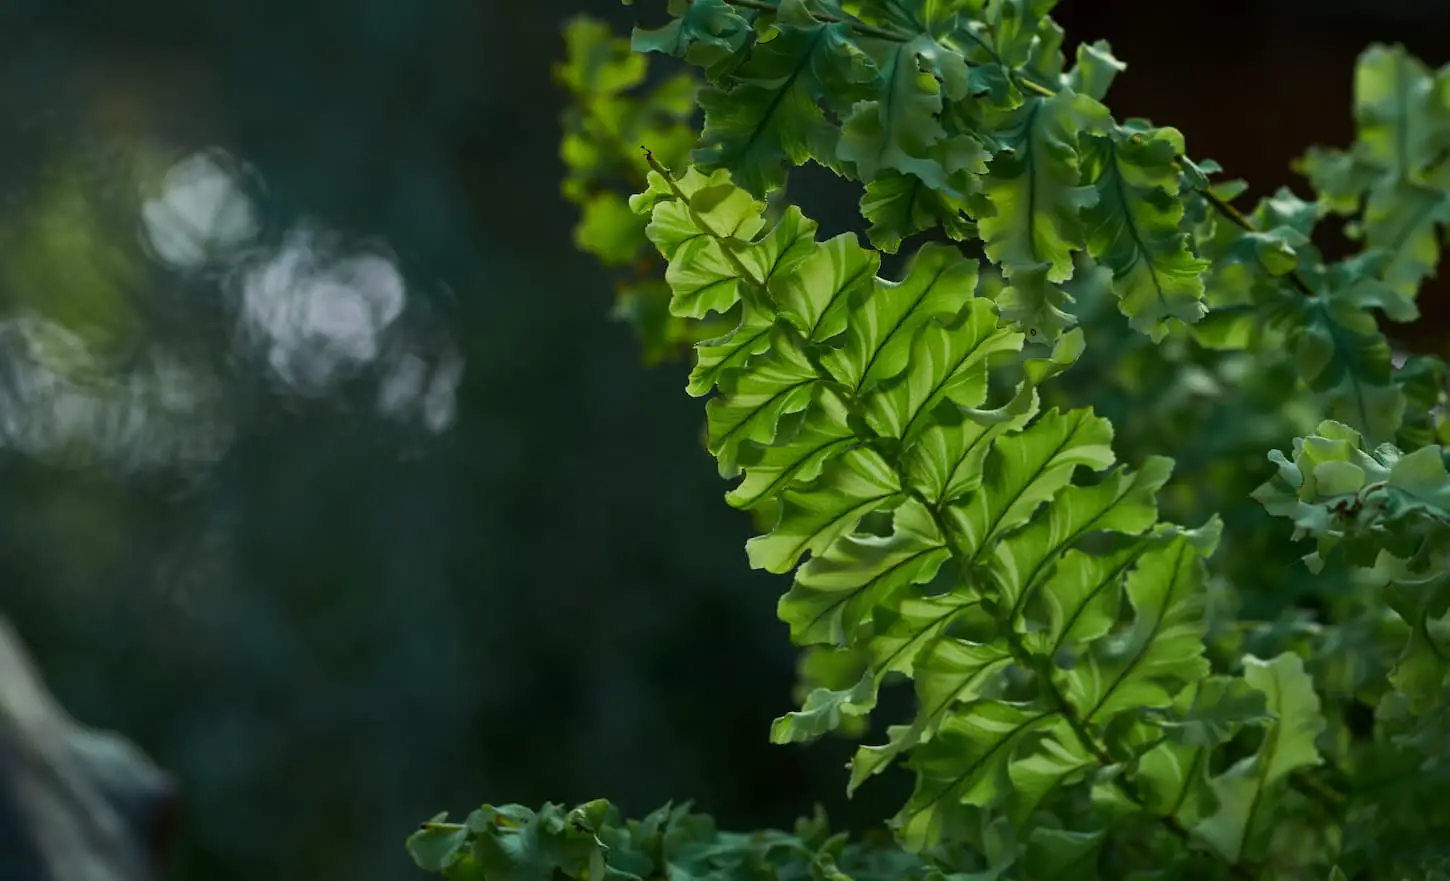 An image of fresh green Boston fern leaves.